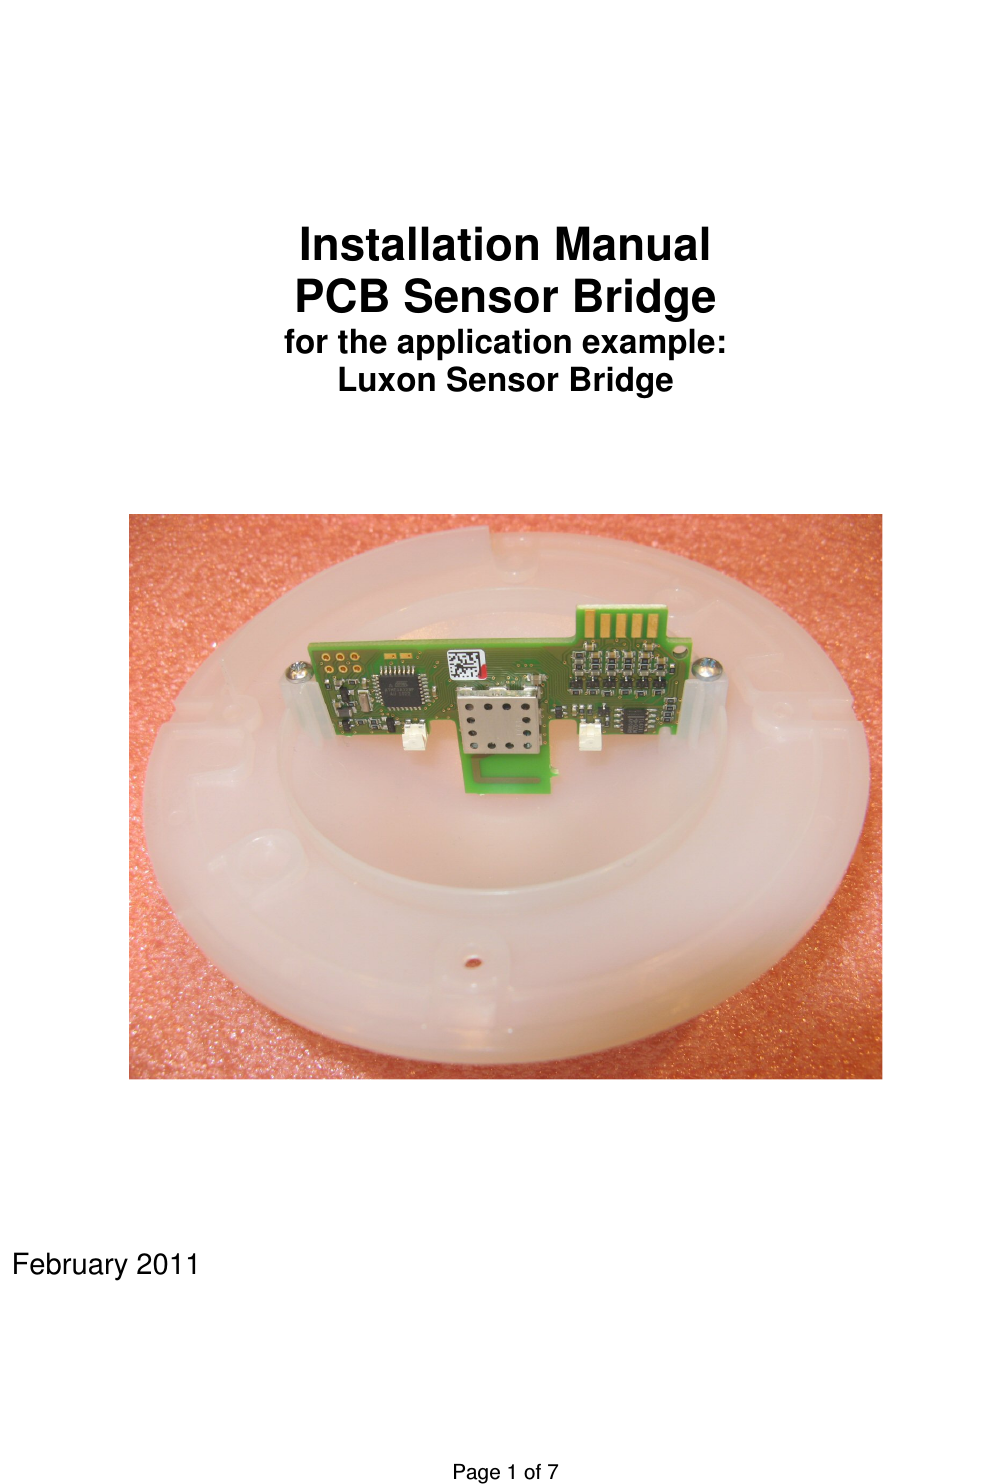   Page 1 of 7           Installation Manual PCB Sensor Bridge for the application example: Luxon Sensor Bridge           February 2011  